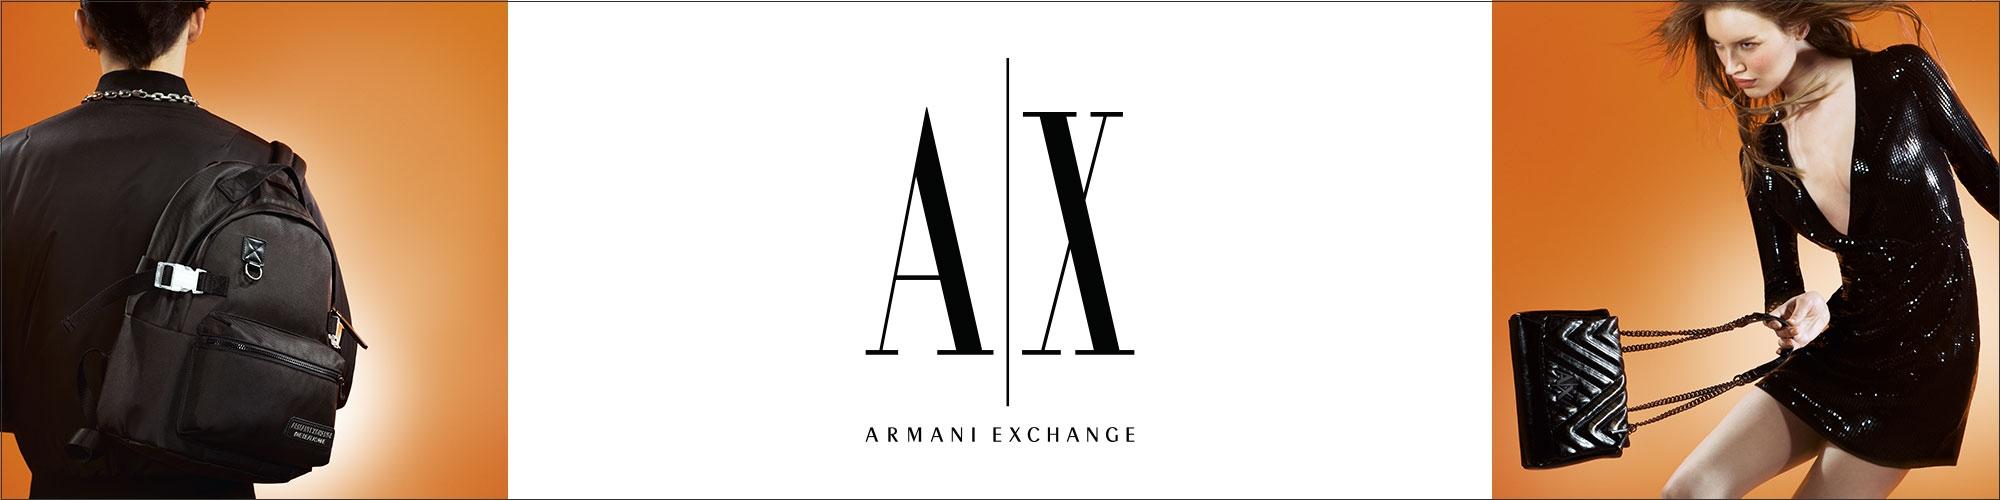 Armani Exchange Men's Monogram Crossbody Bag